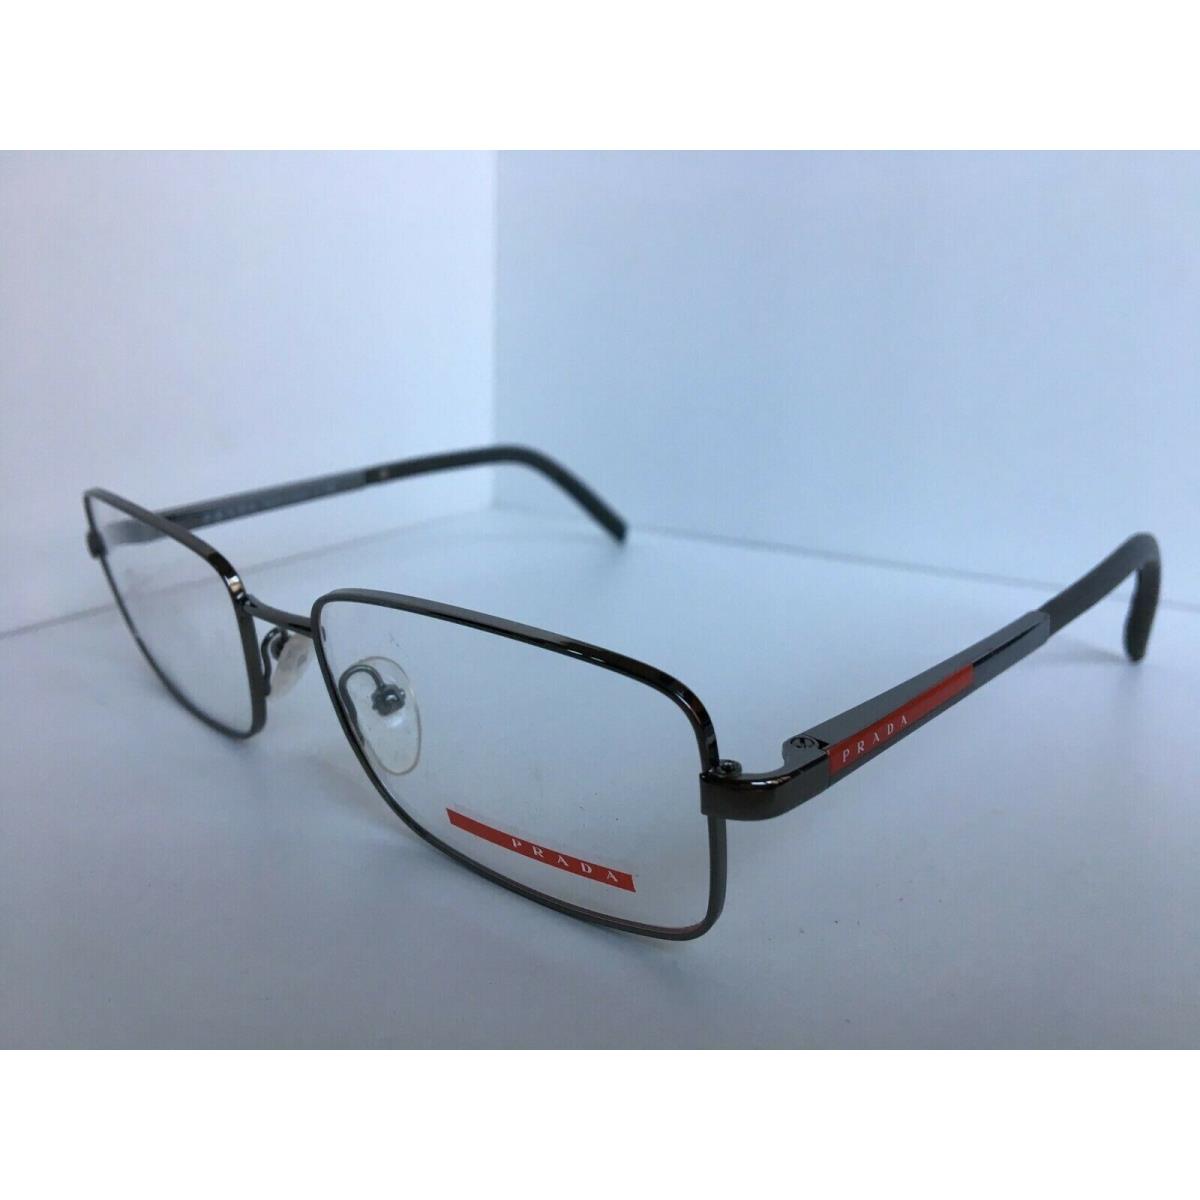 Prada eyeglasses  - Silver Frame 0